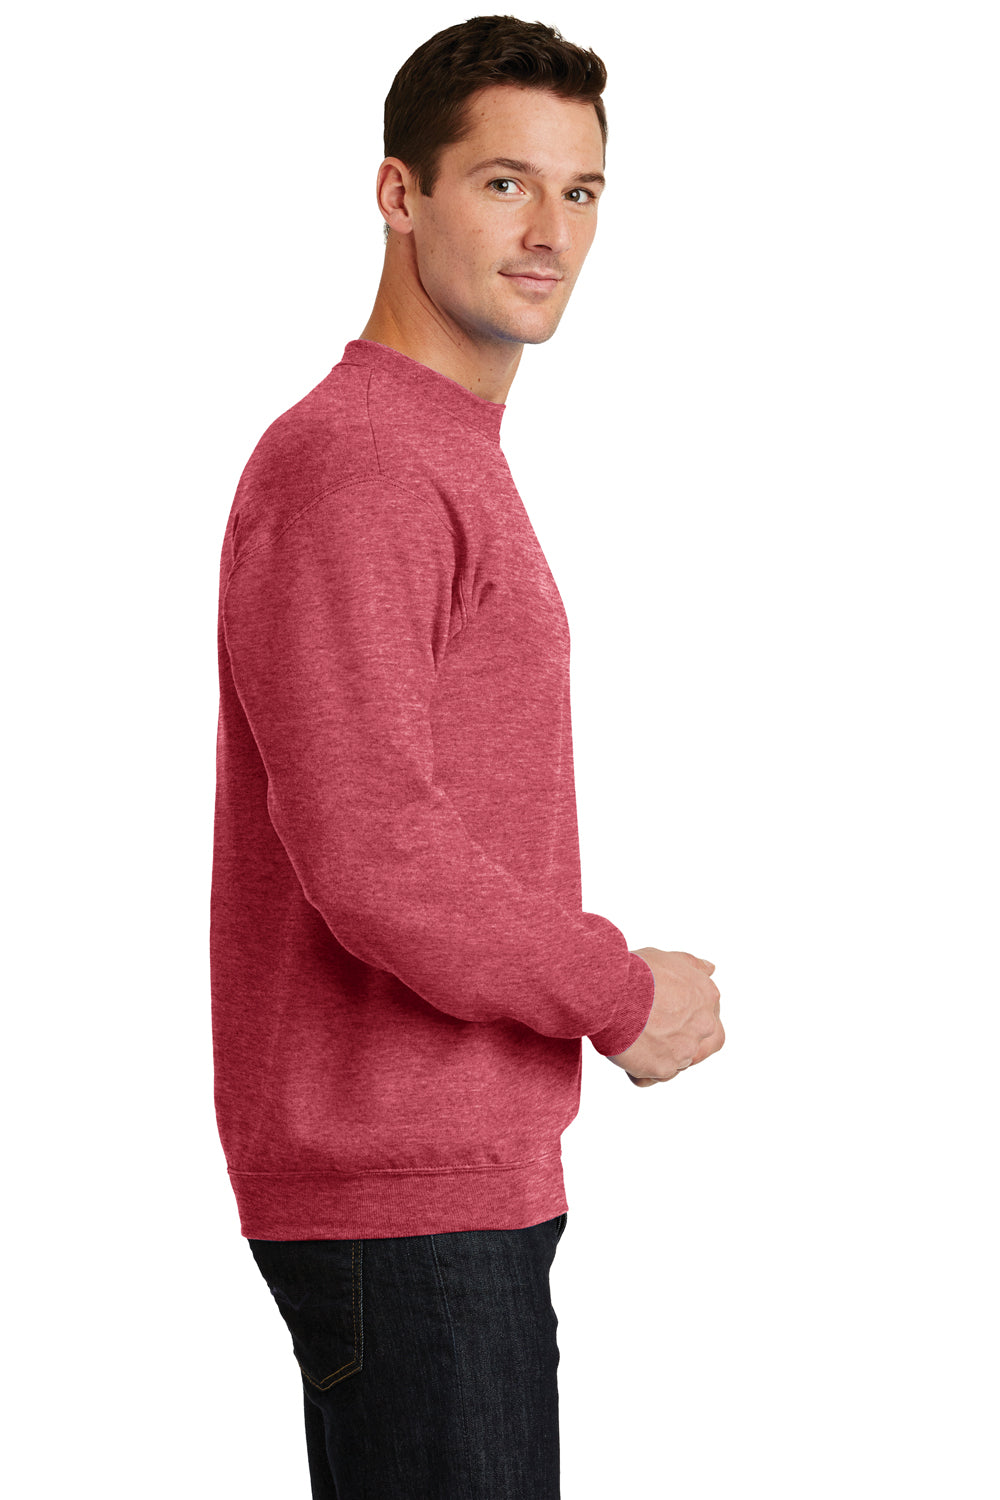 Port & Company PC78 Mens Core Fleece Crewneck Sweatshirt Heather Red Side